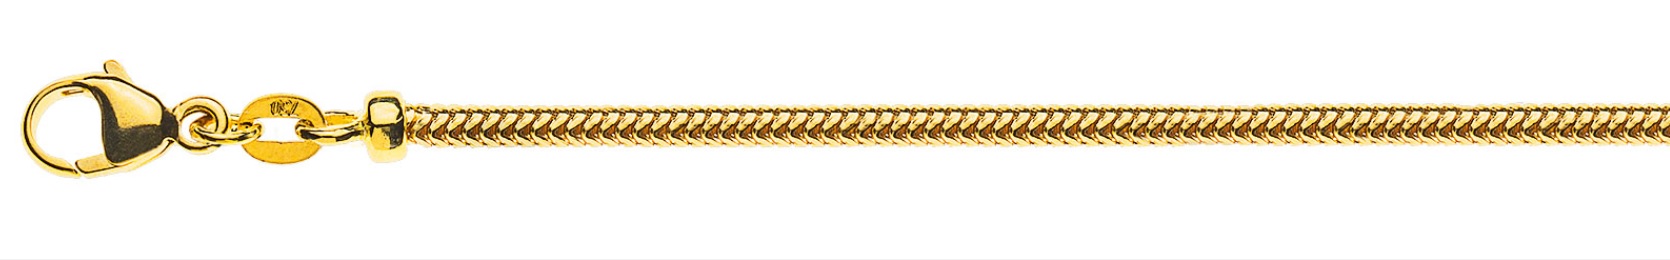 AURONOS Prestige Necklace yellow gold 18K snake chain 42cm 2.4mm